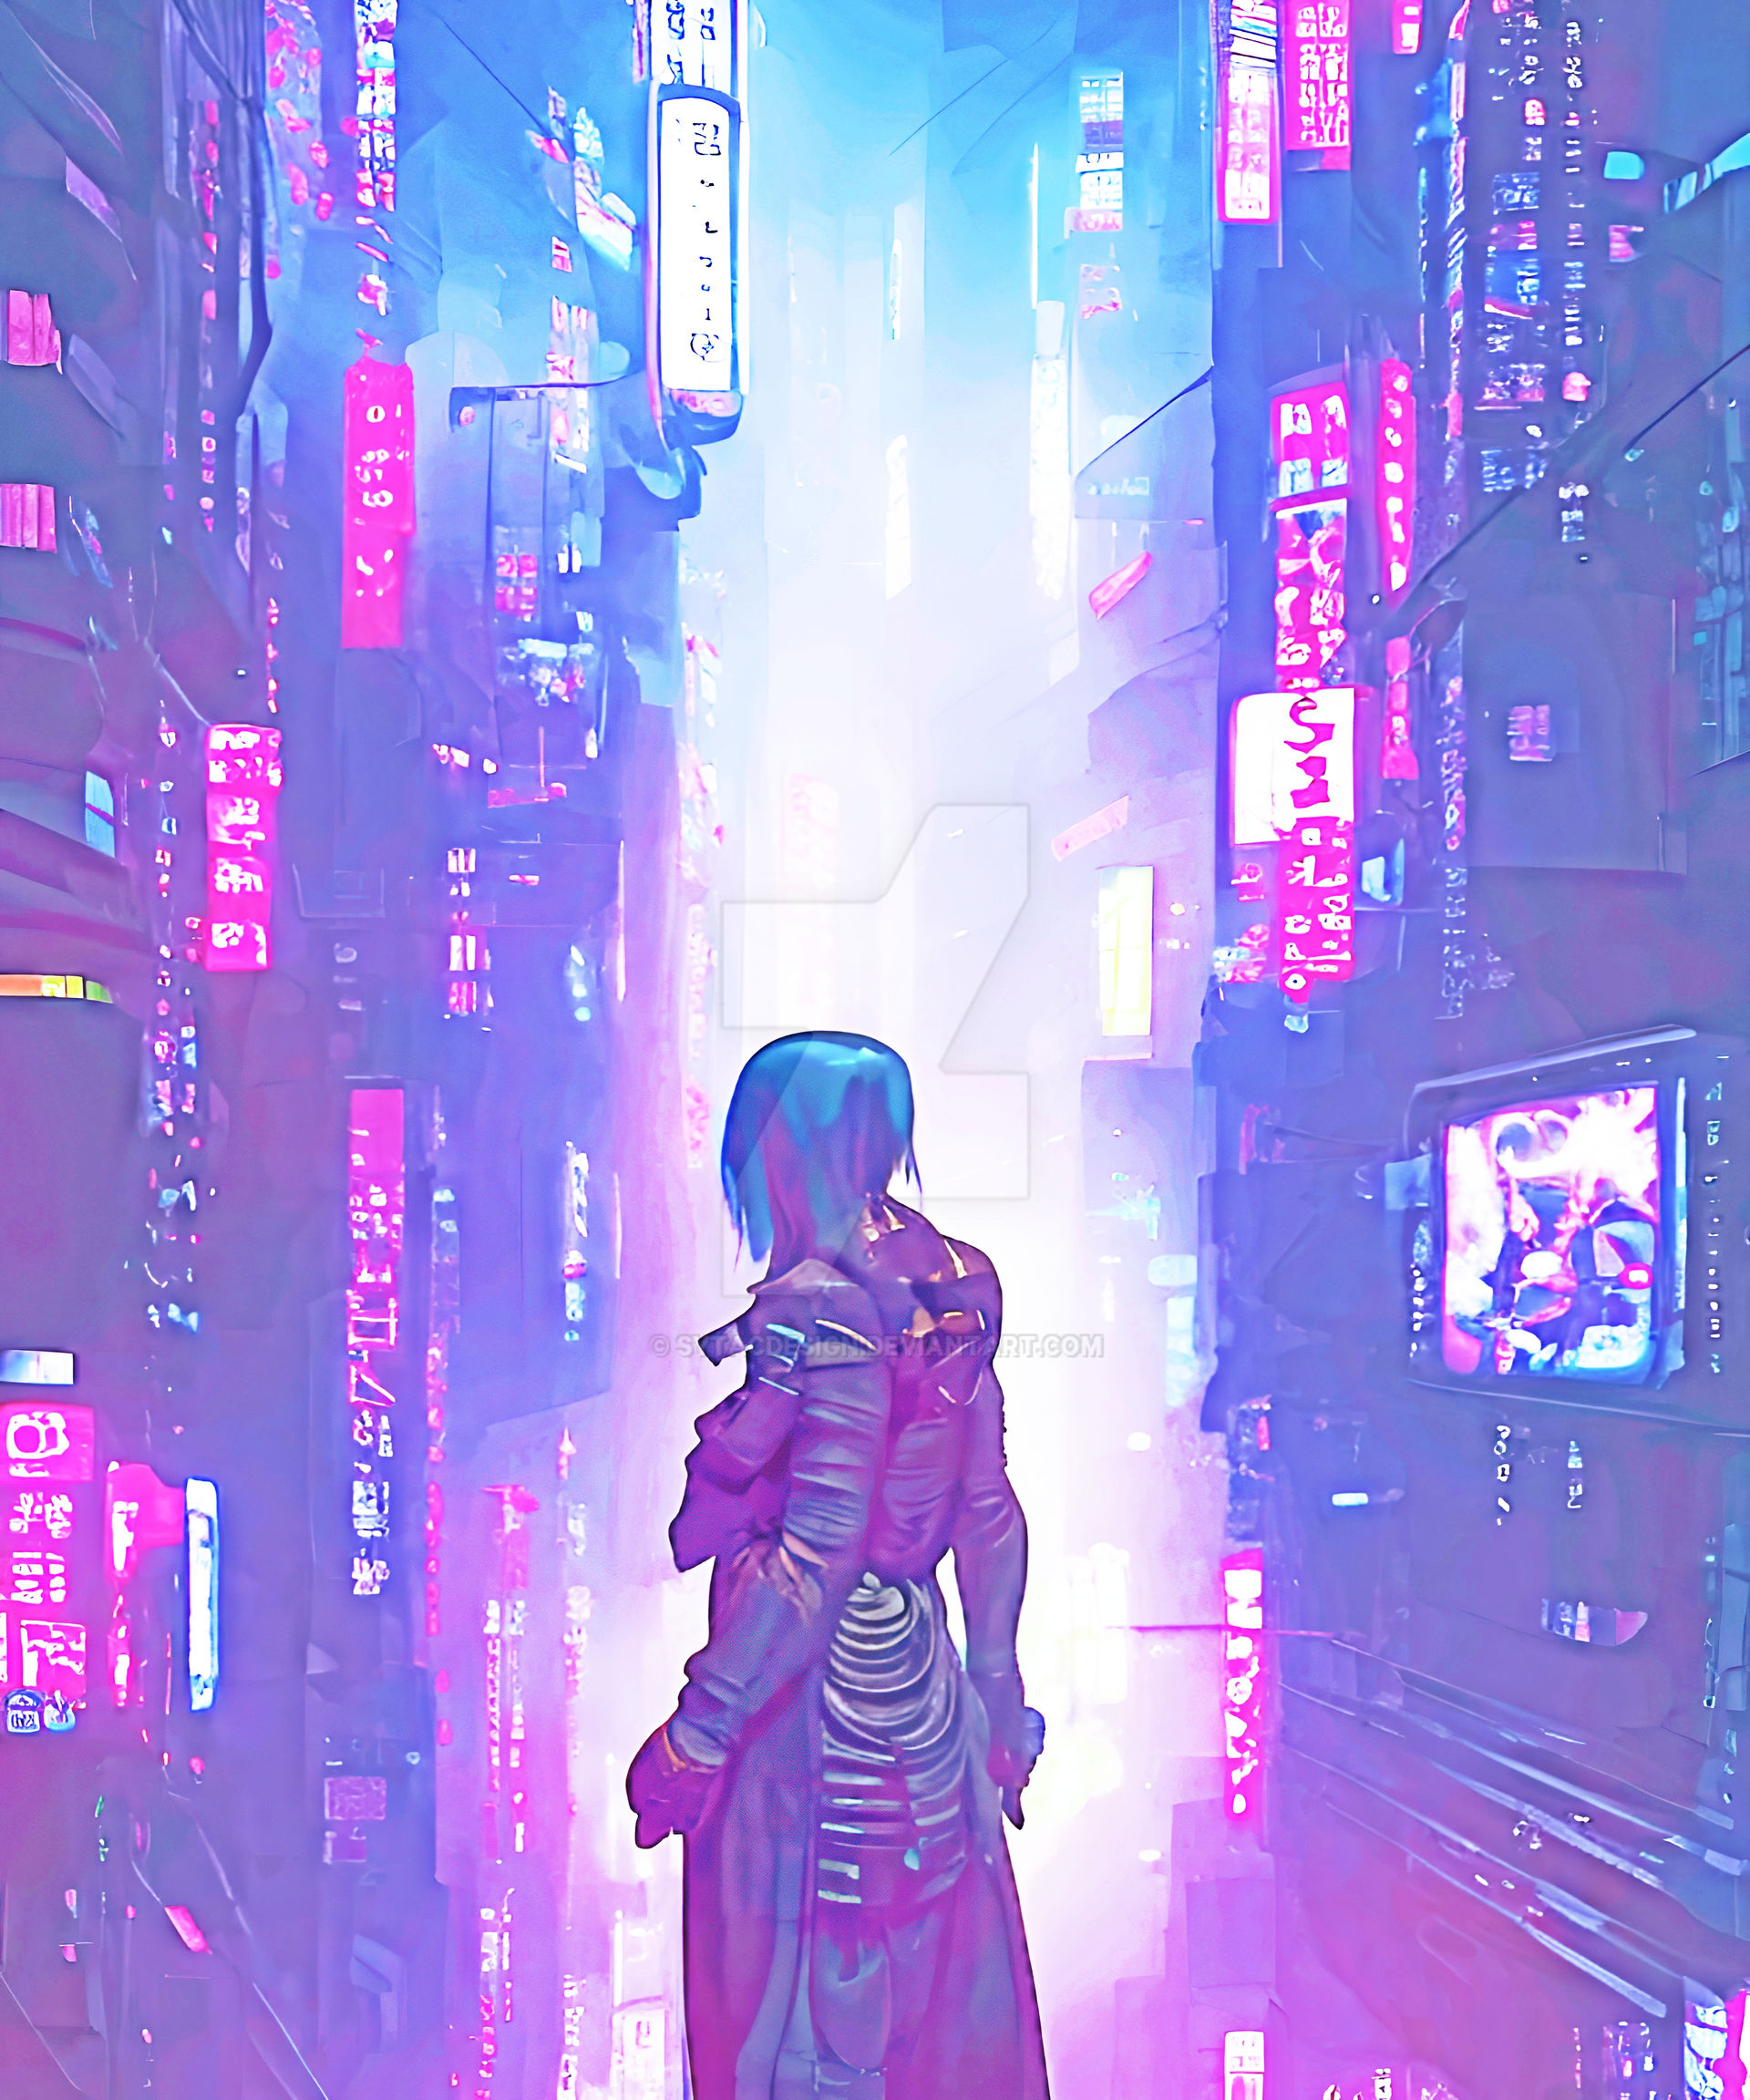 Premium AI Image  An anime style image of a cyberpunk girl wielding a  katana